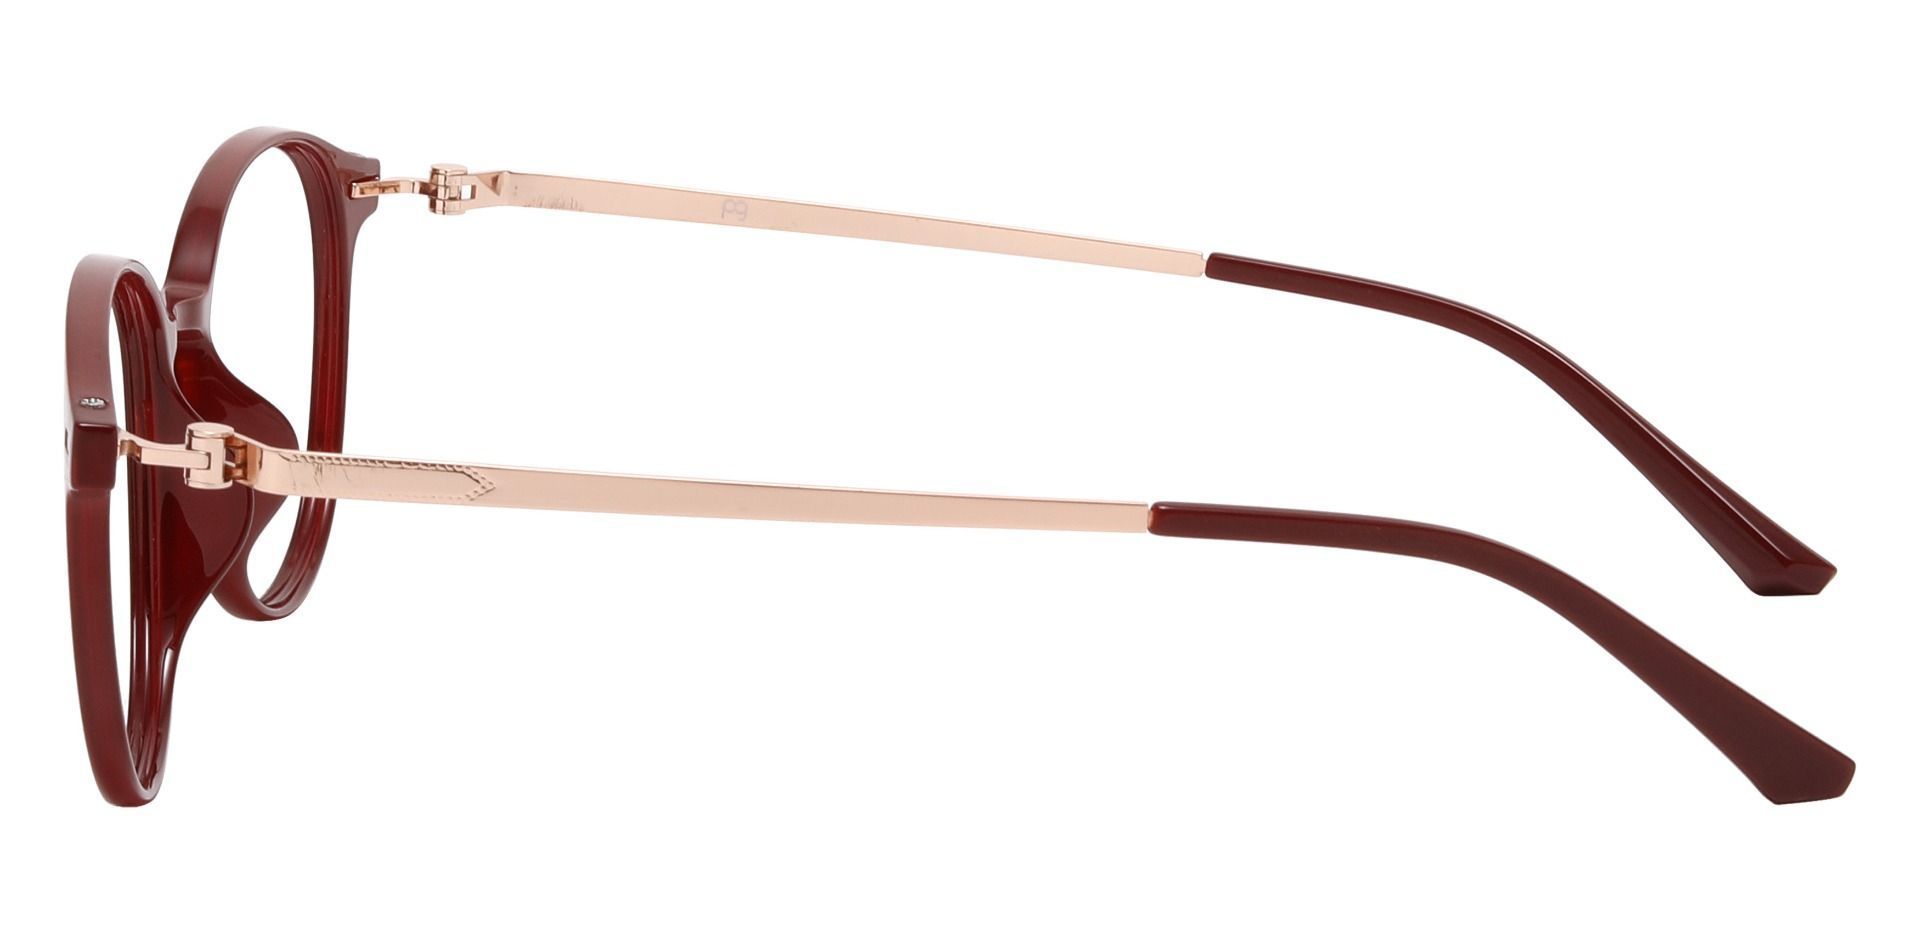 Springer Round Lined Bifocal Glasses - Red